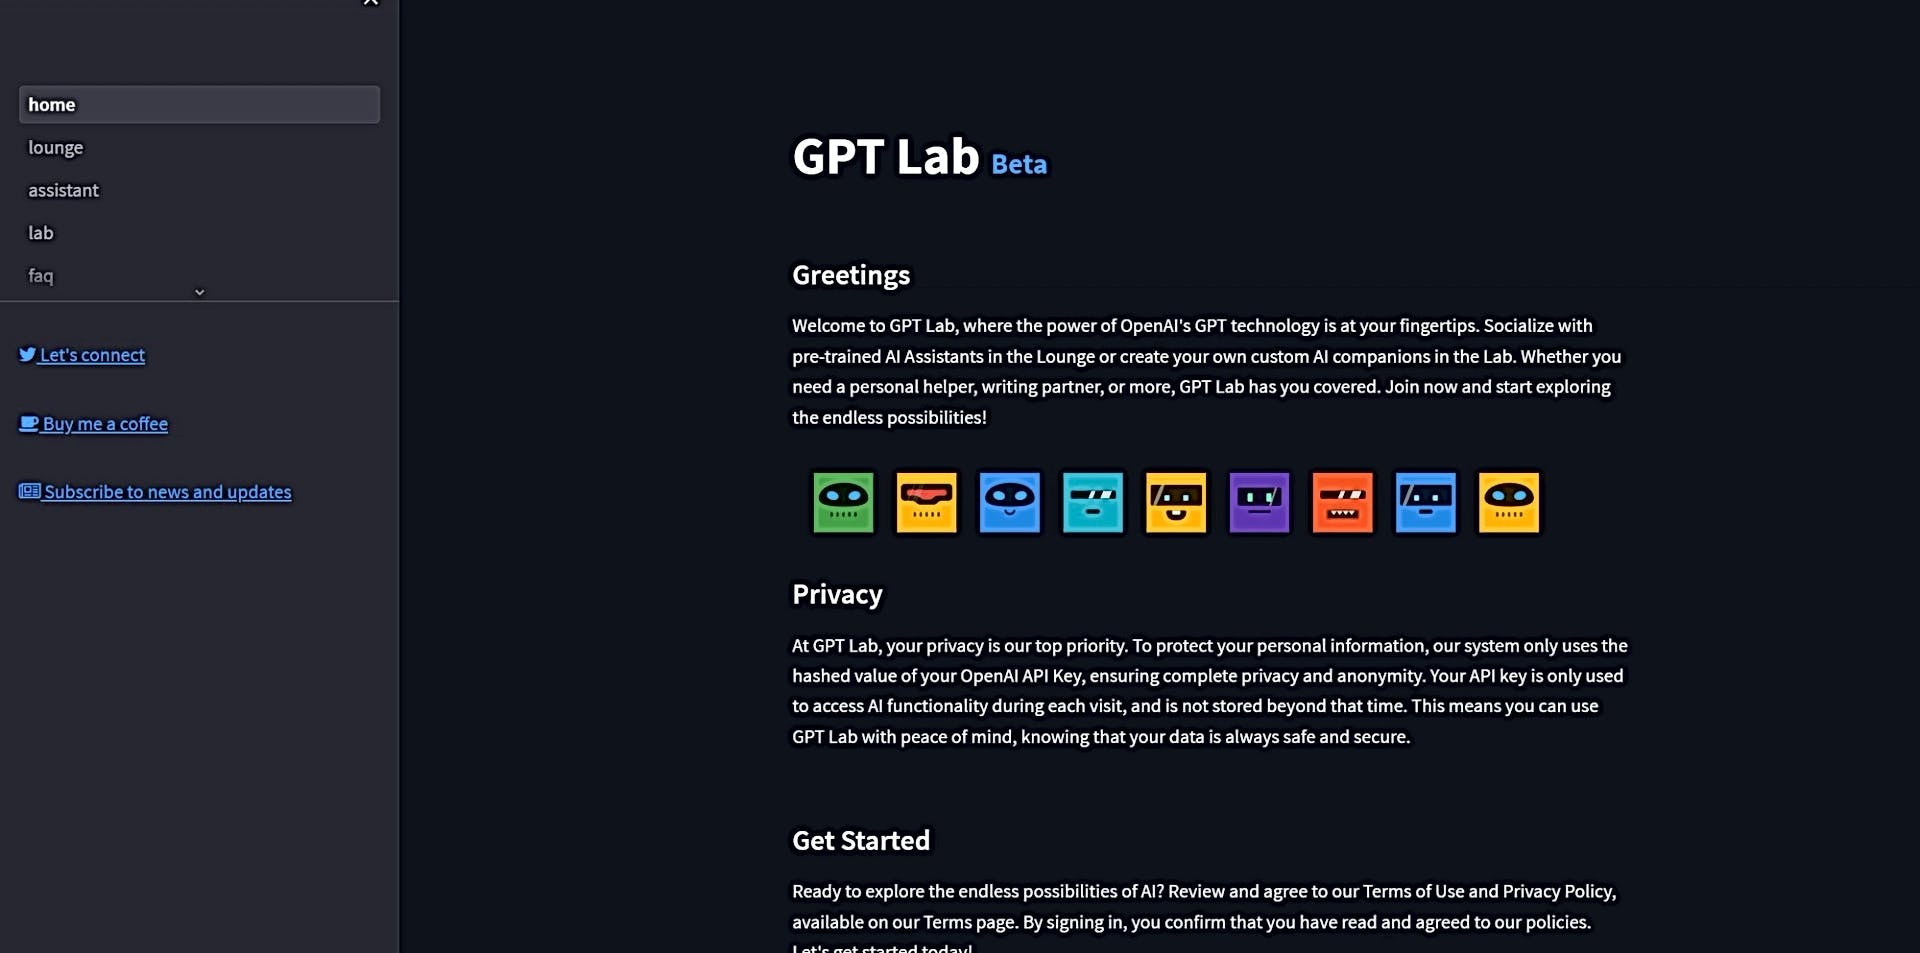 GPT Lab featured